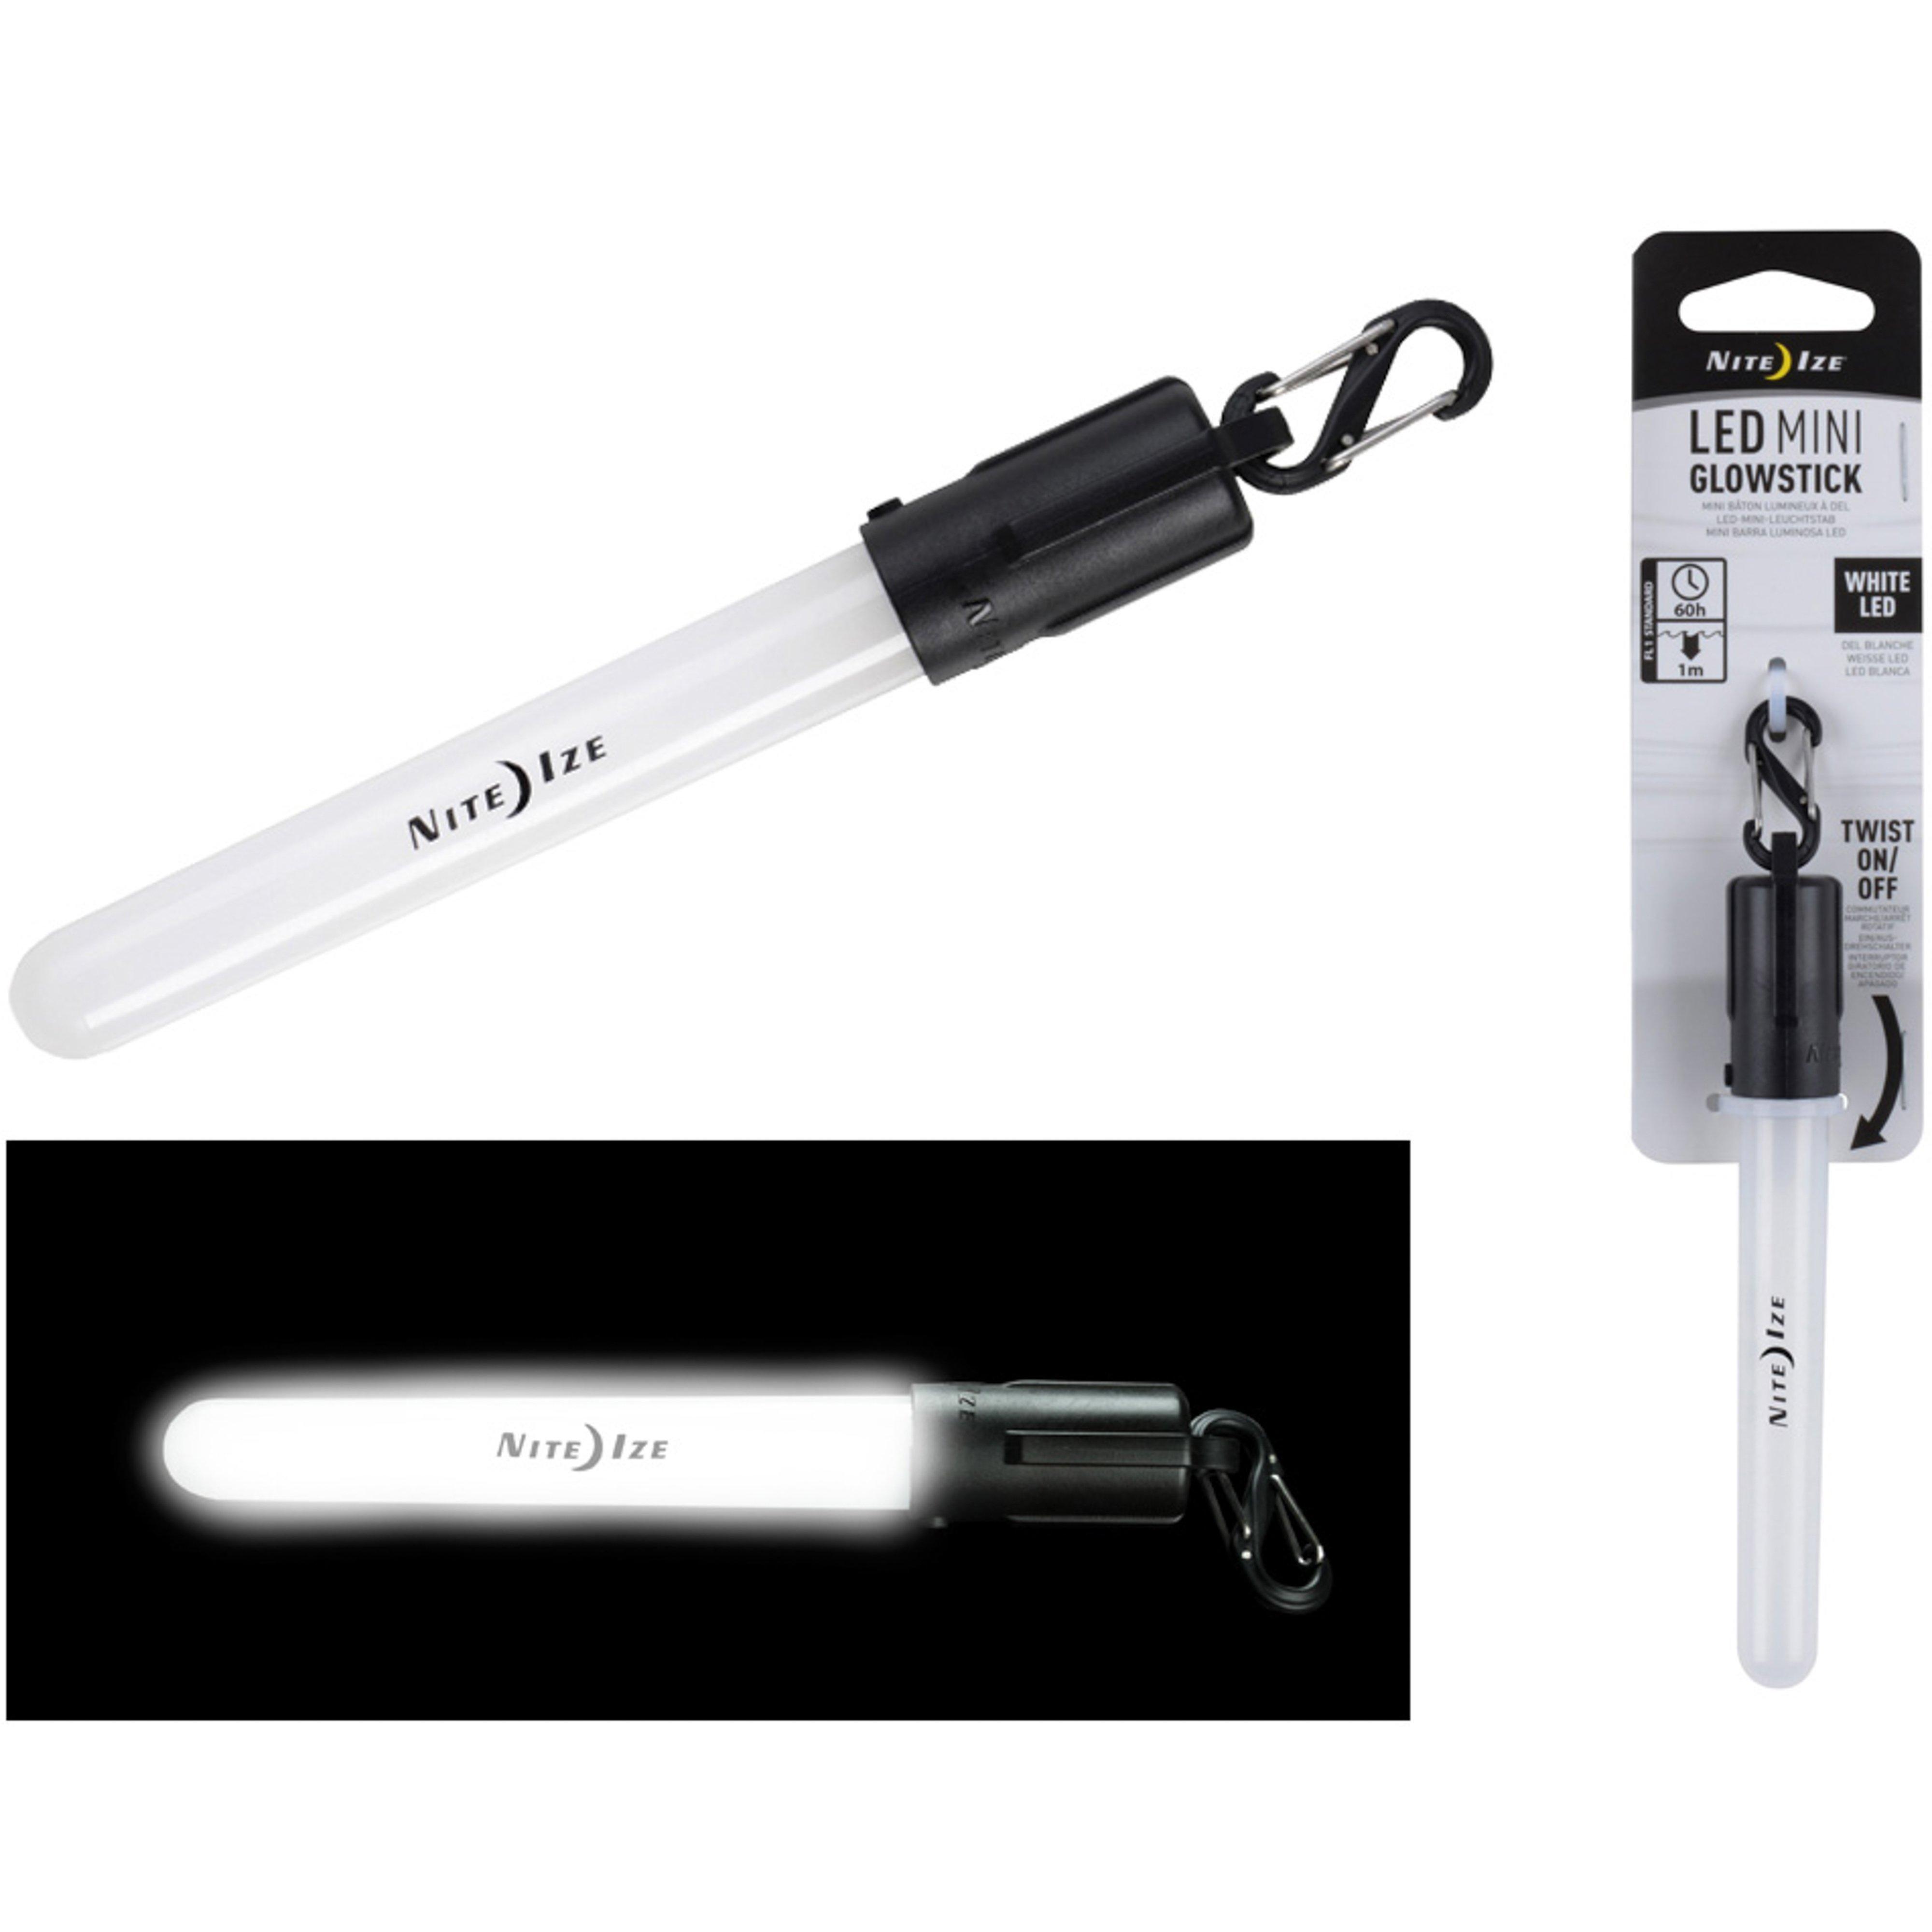 Niteize LED Mini Glowstick (White) Review